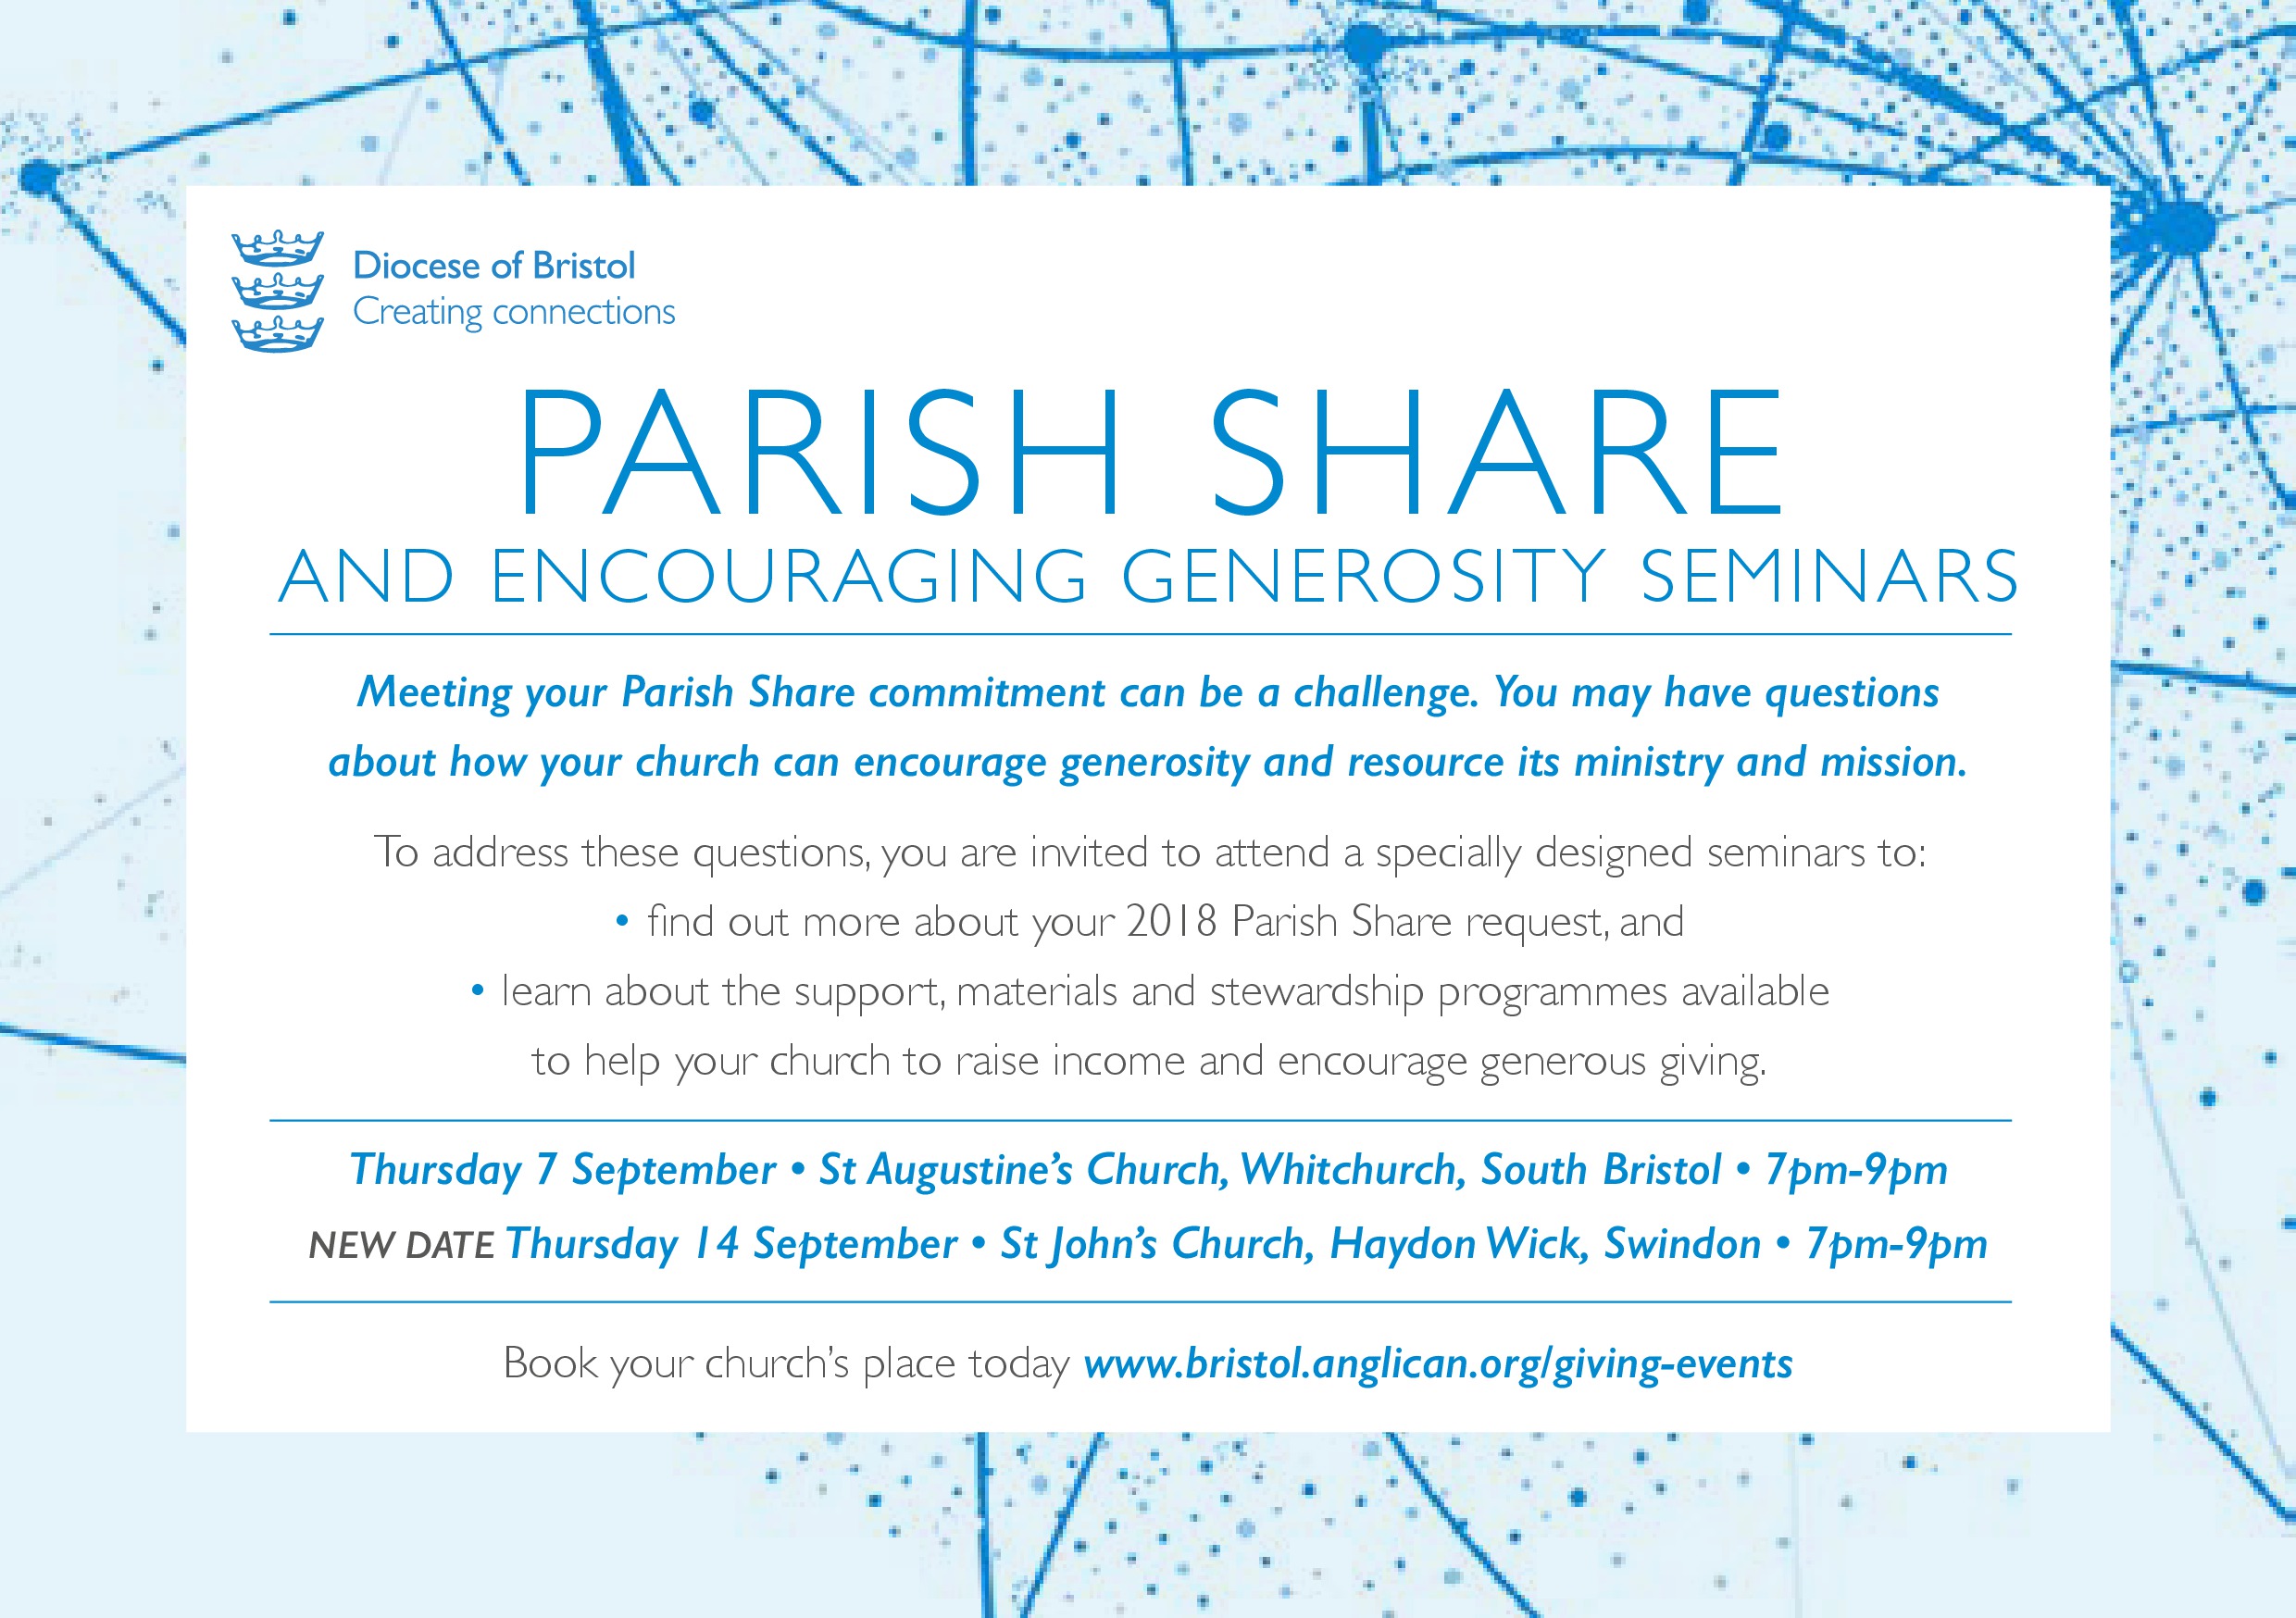 Flyer advertising Parish Share events